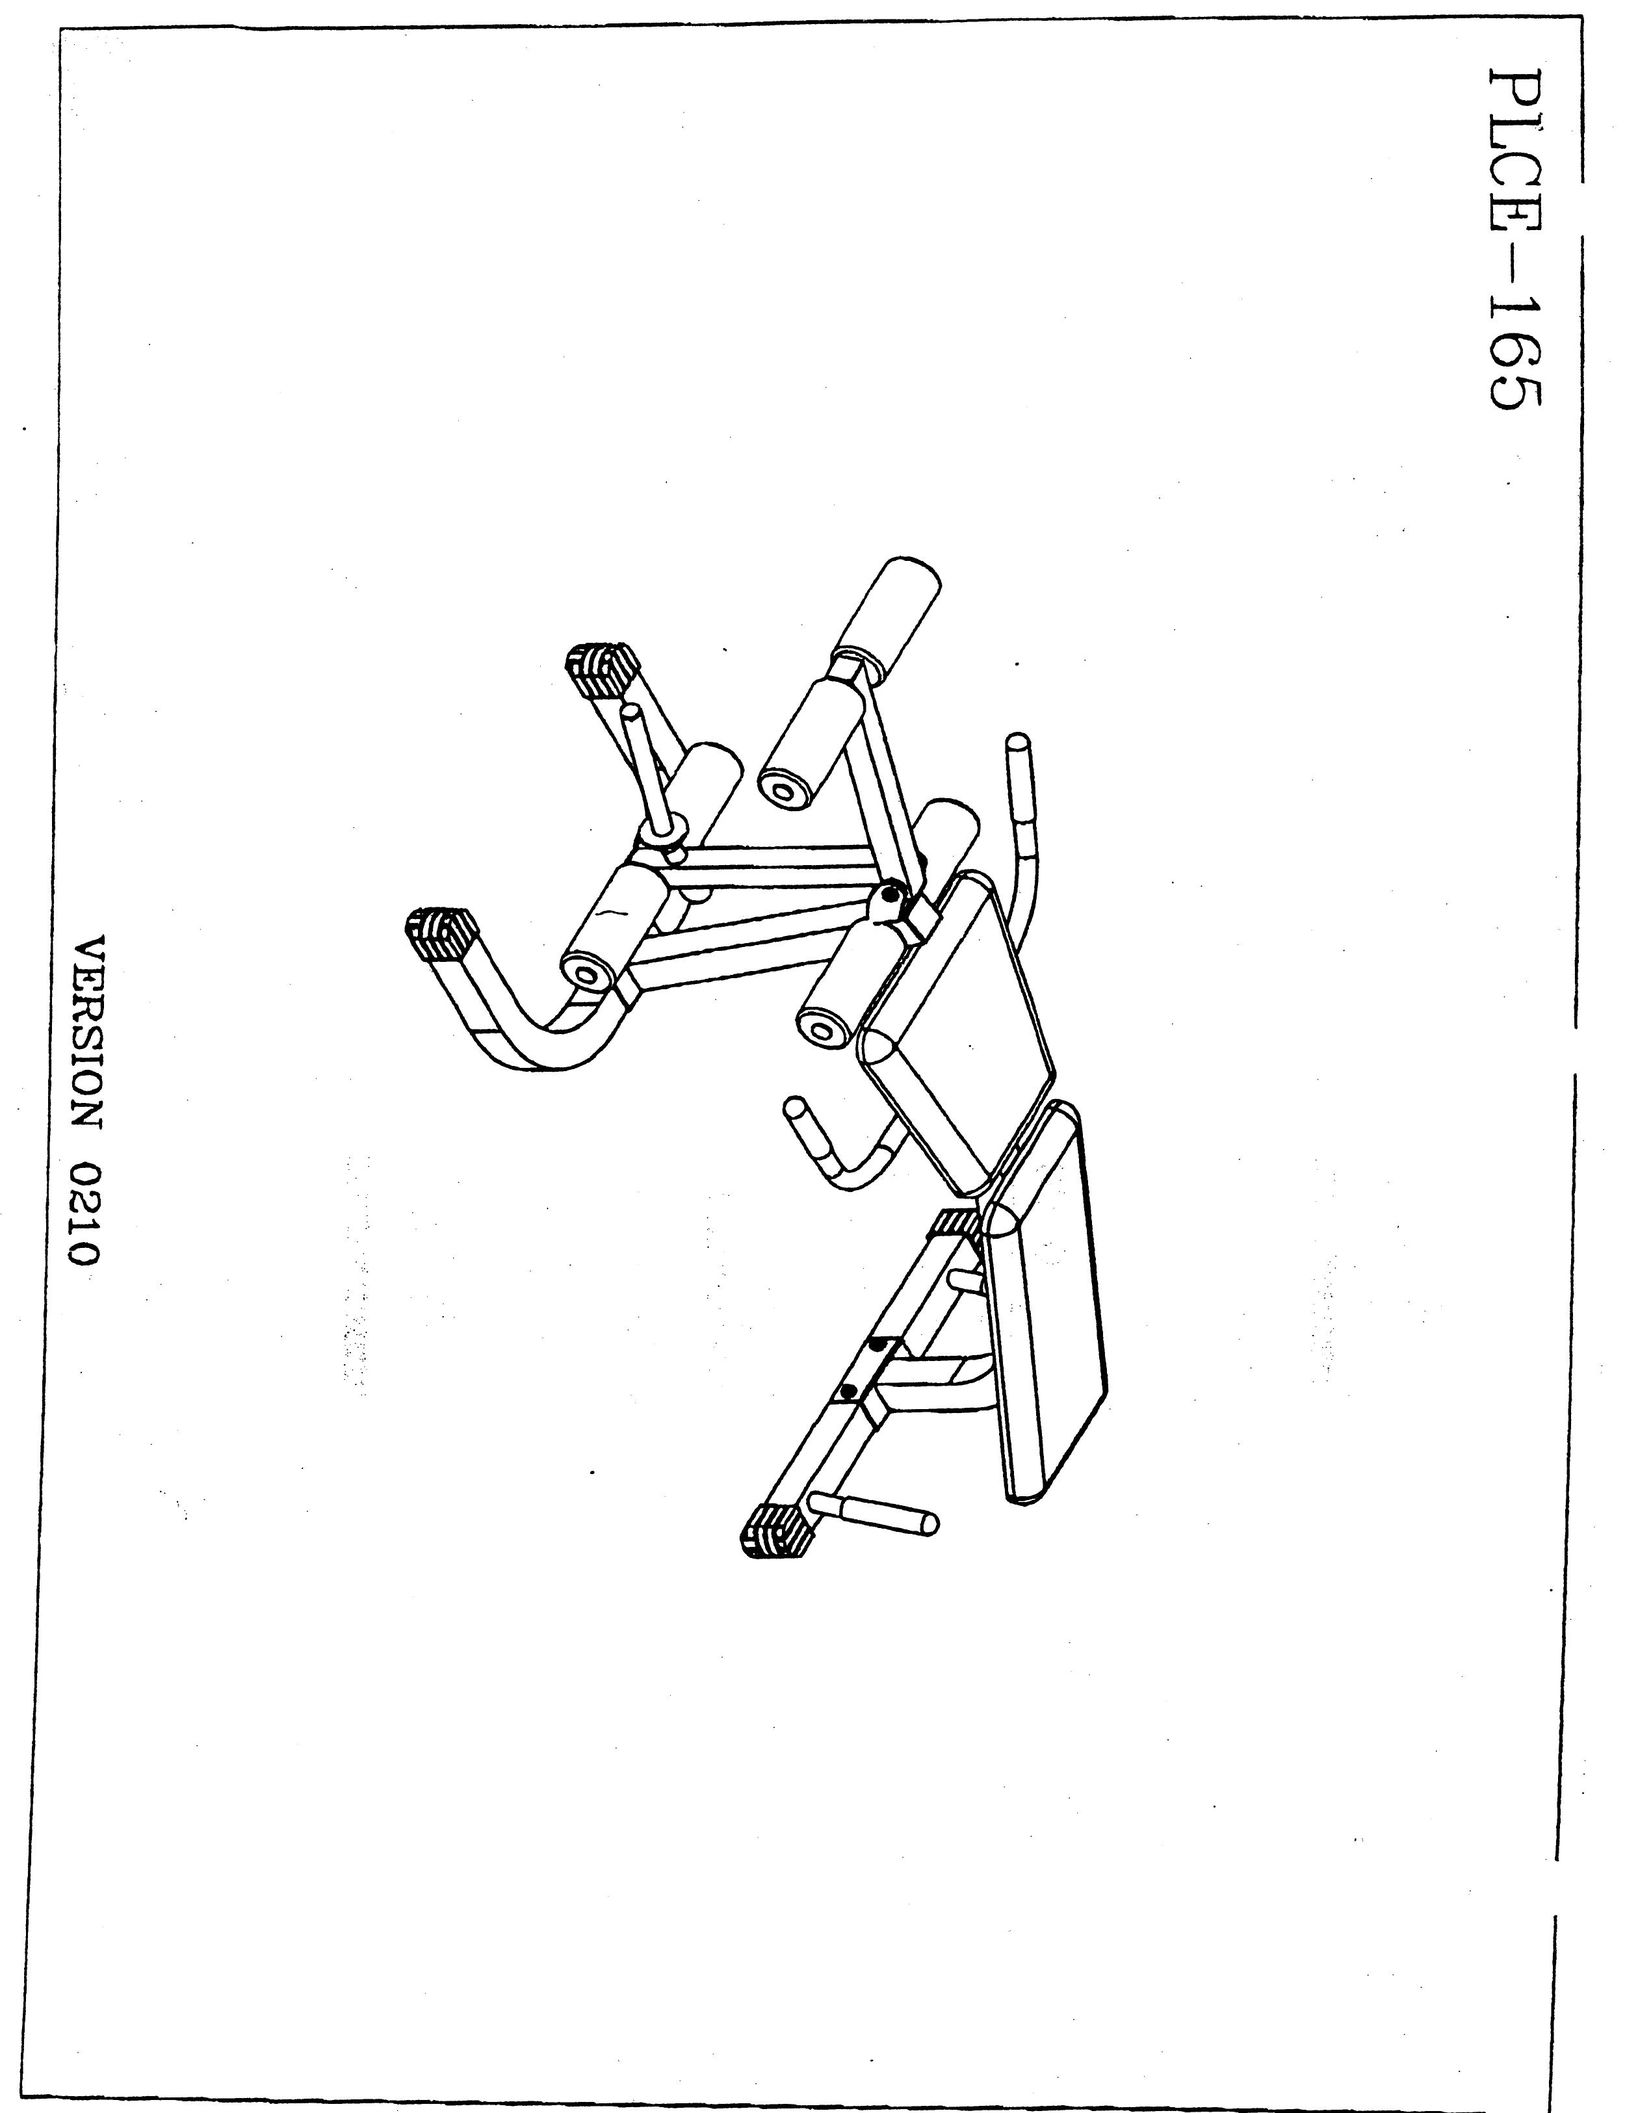 American Power Conversion PLCE165 Elliptical Trainer User Manual